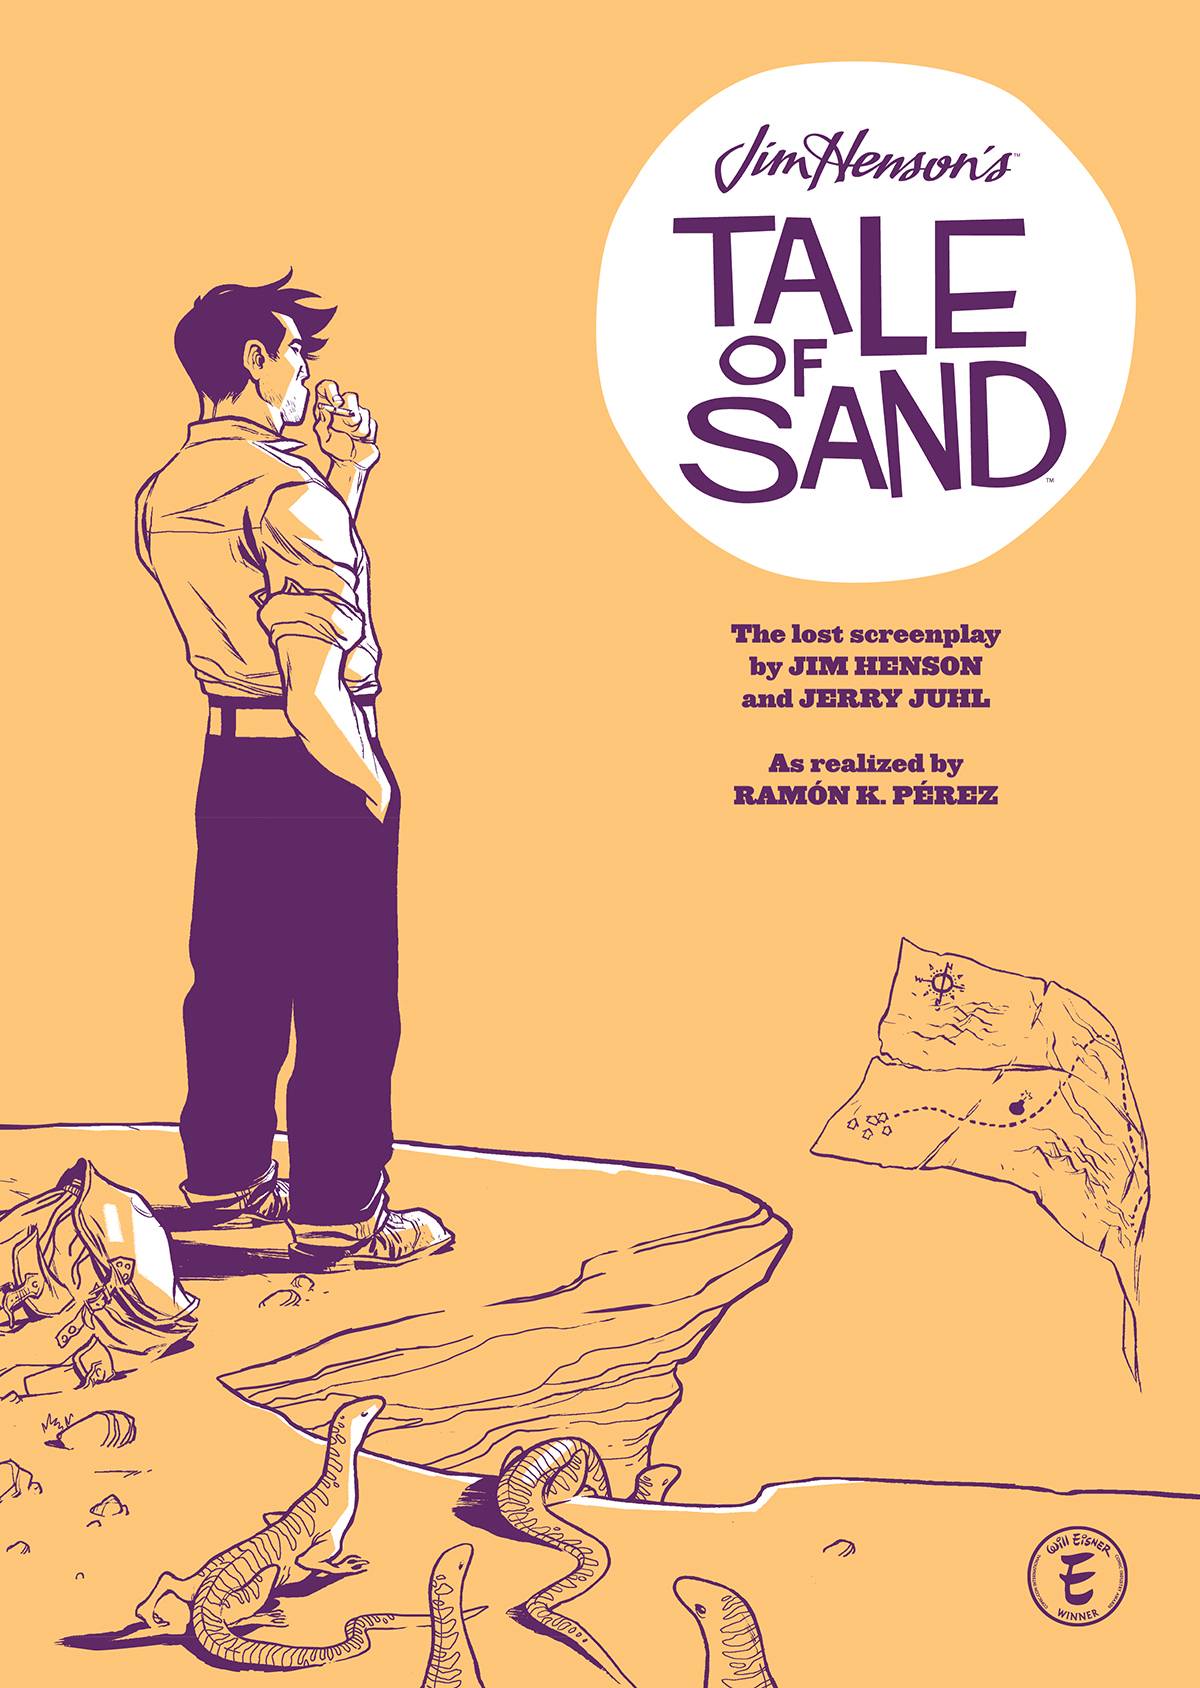 Jim Hensons Tale of Sand Graphic Novel